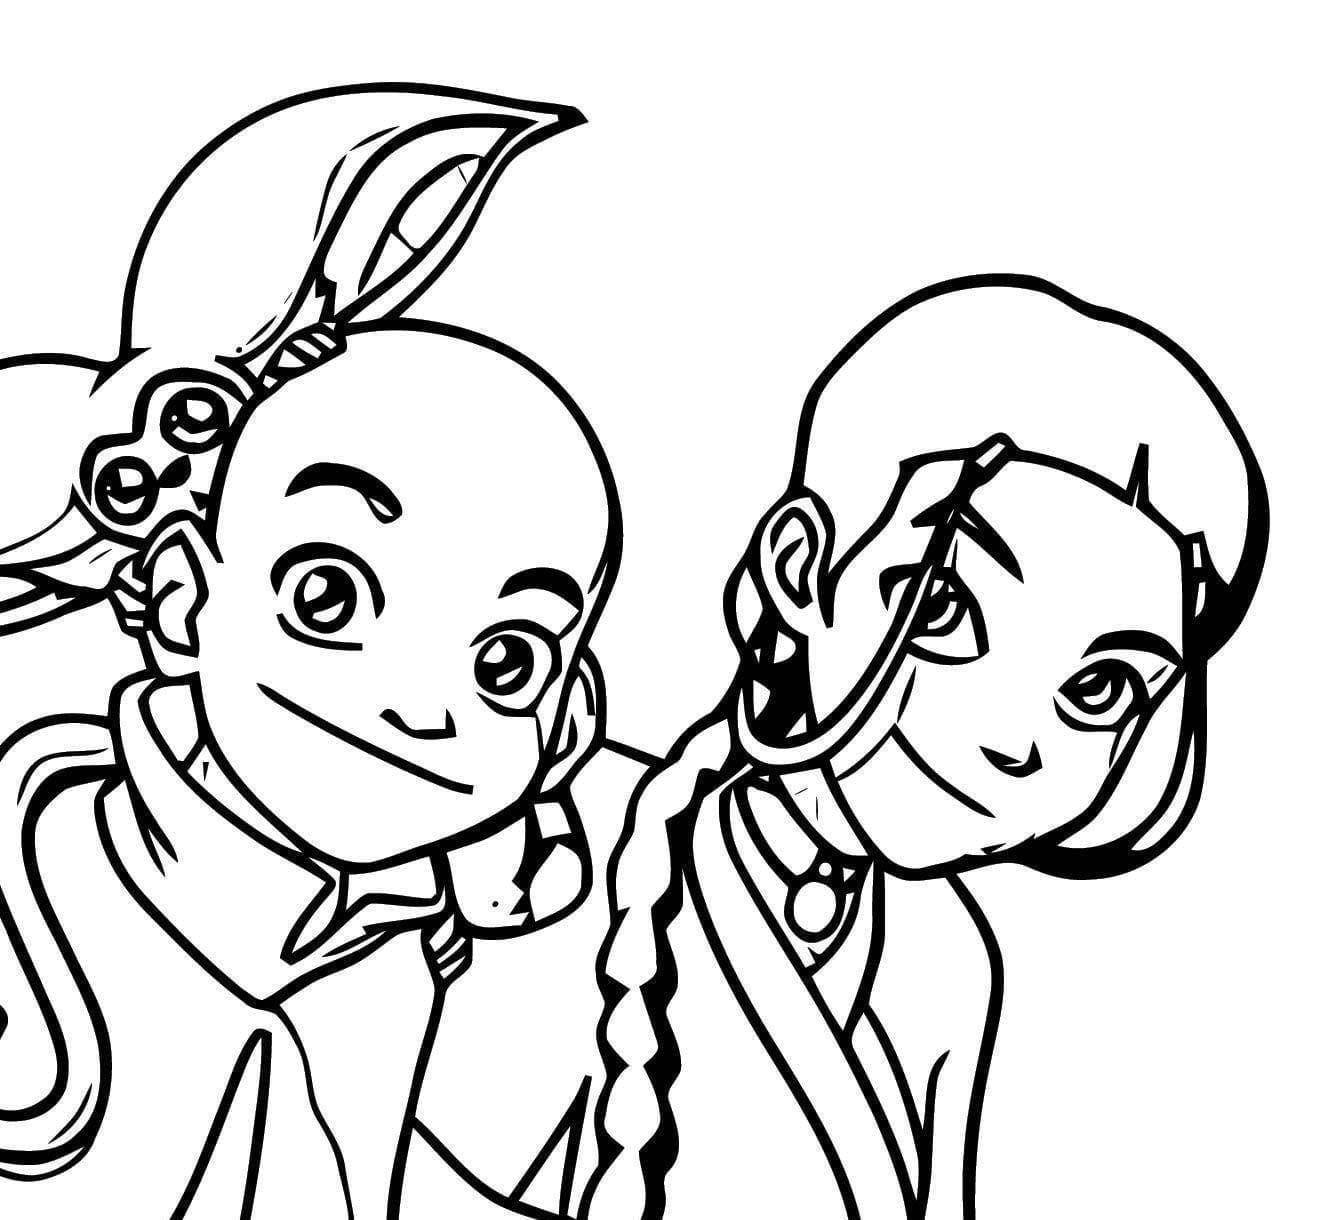 Aang, Momo et Katara coloring page